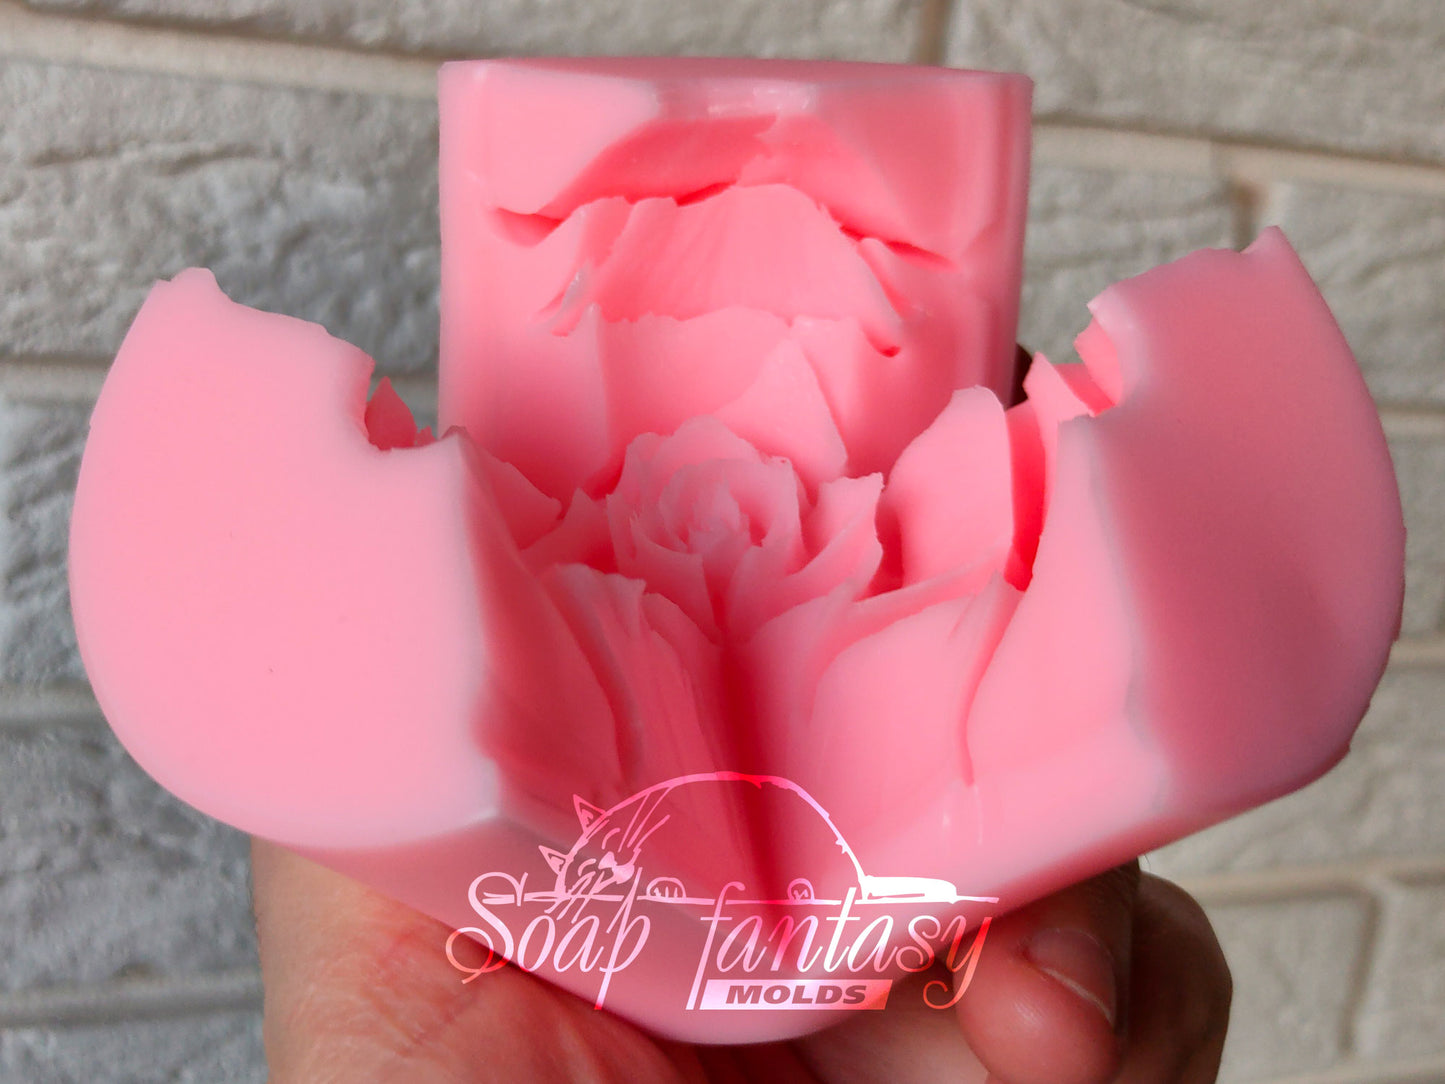 Big rose "Esperanse" silicone mold for soap making